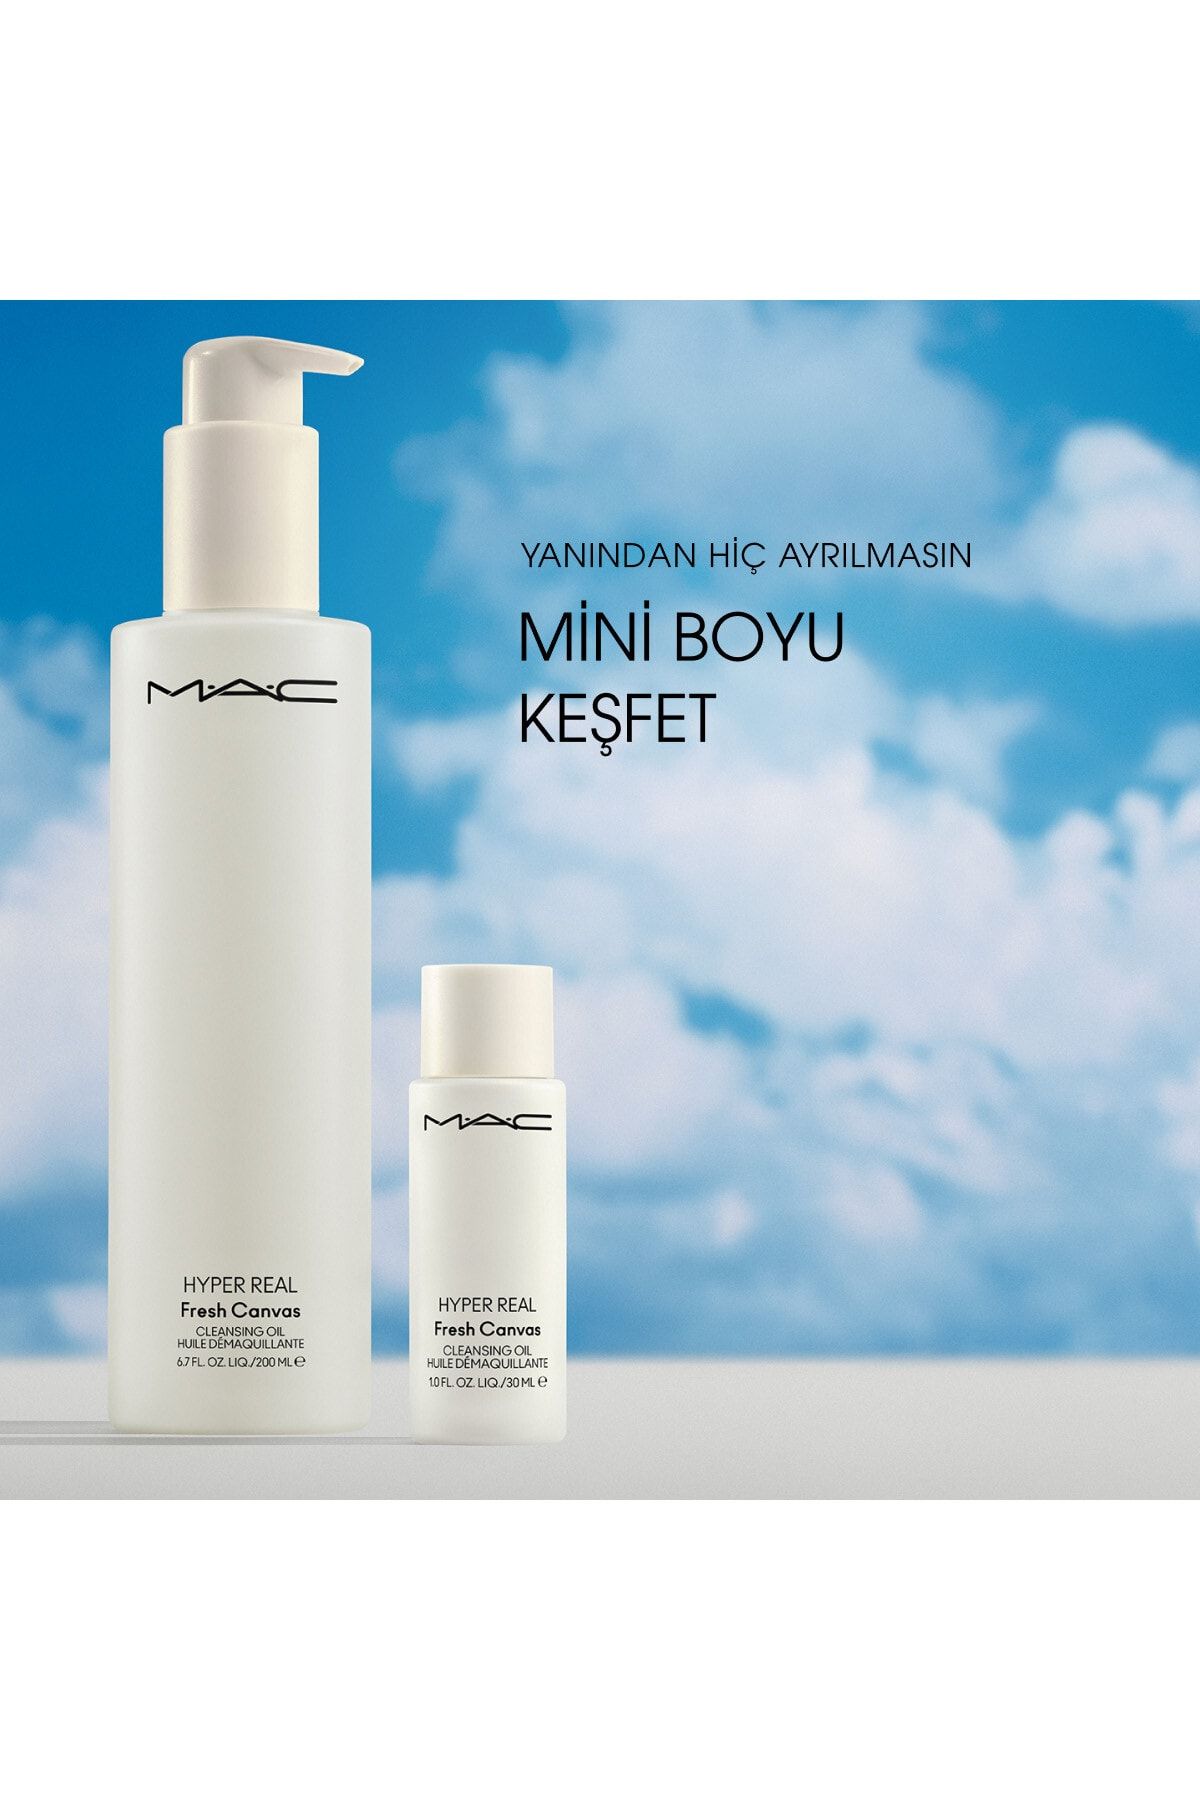 Mac روغن پاک کننده آرایش و پوست Hyper Real™ حفظ تعادل رطوبت پوست 200 میل